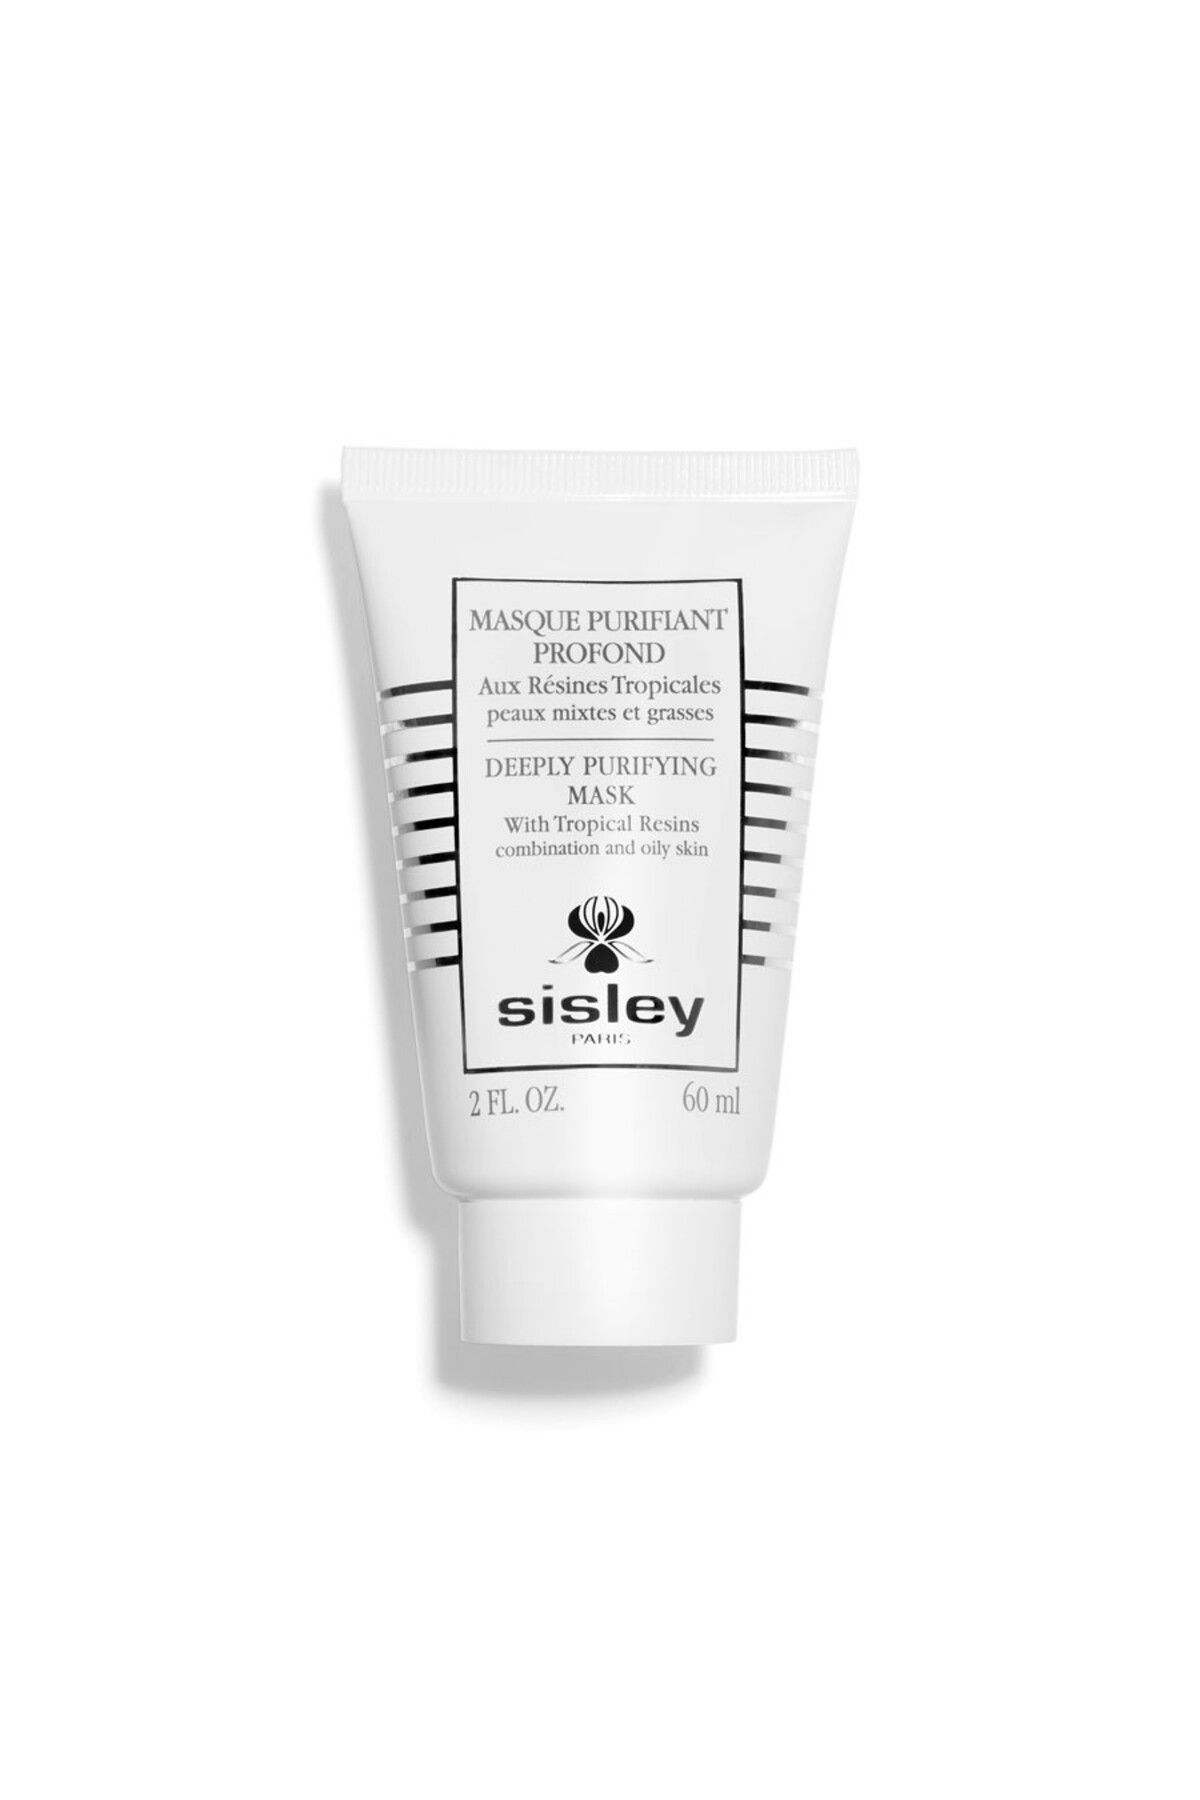 Sisley Masque Purifiant Profond Maske 60 ML